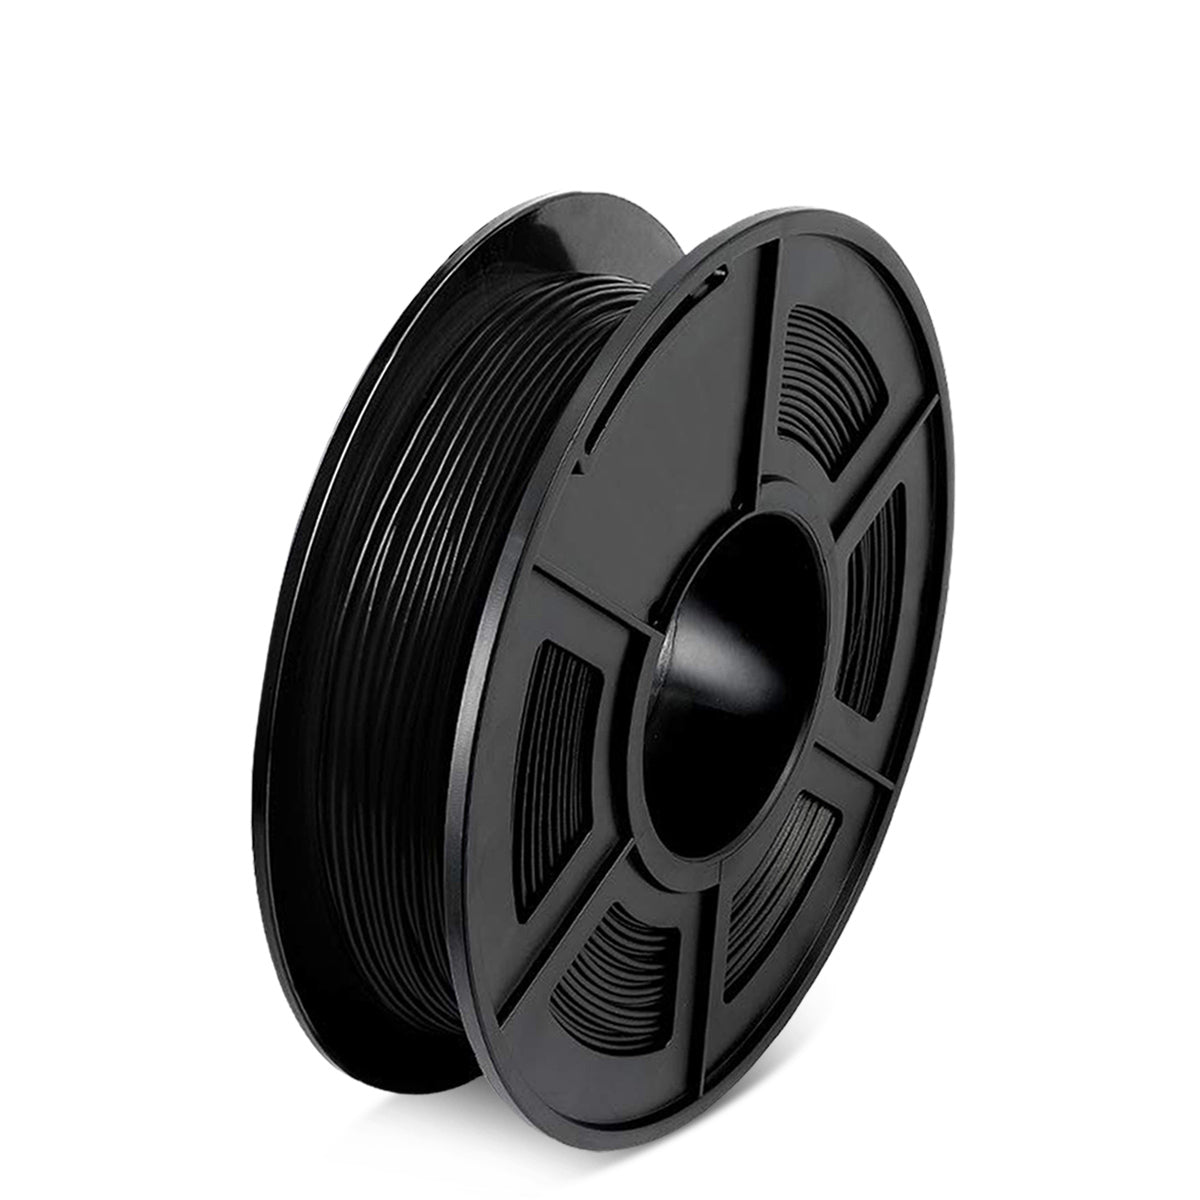 Filamento ABS Plus Nero 1.75mm 1kg - filamenti per stampa 3D FDM Az